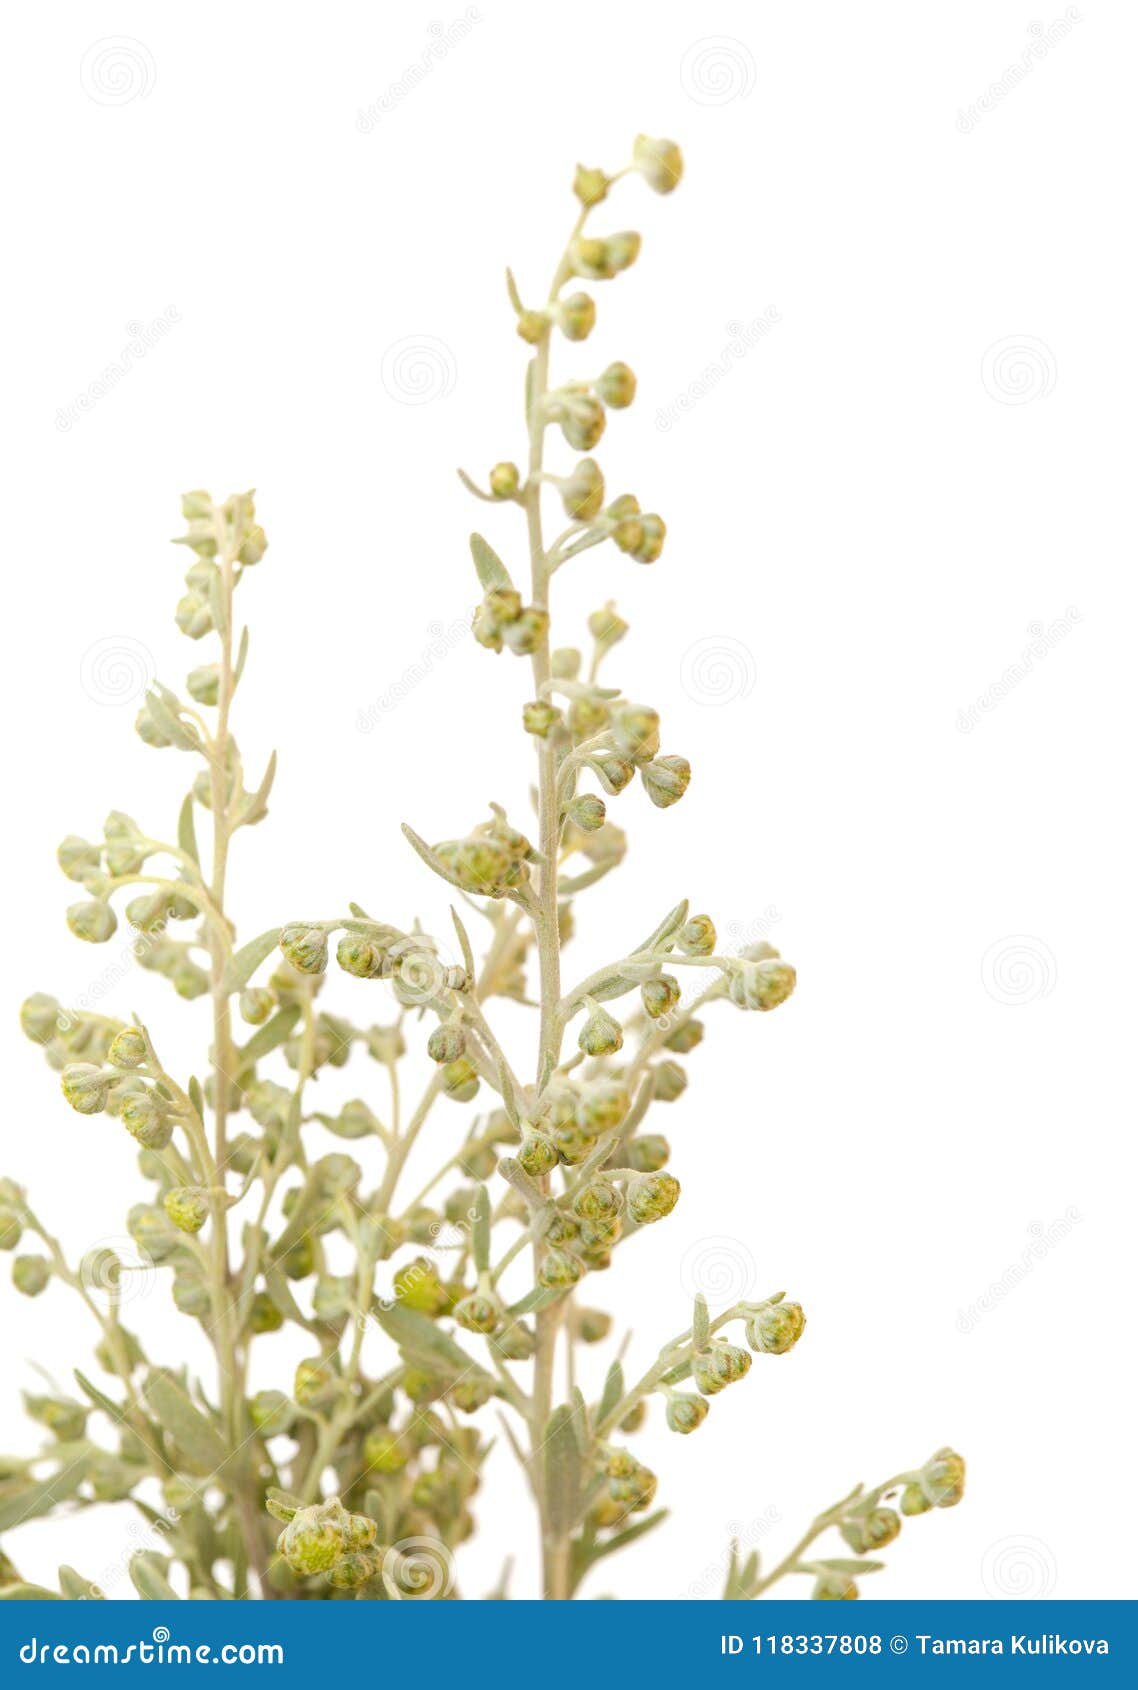 flora of gran canaria - artemisia thuscula